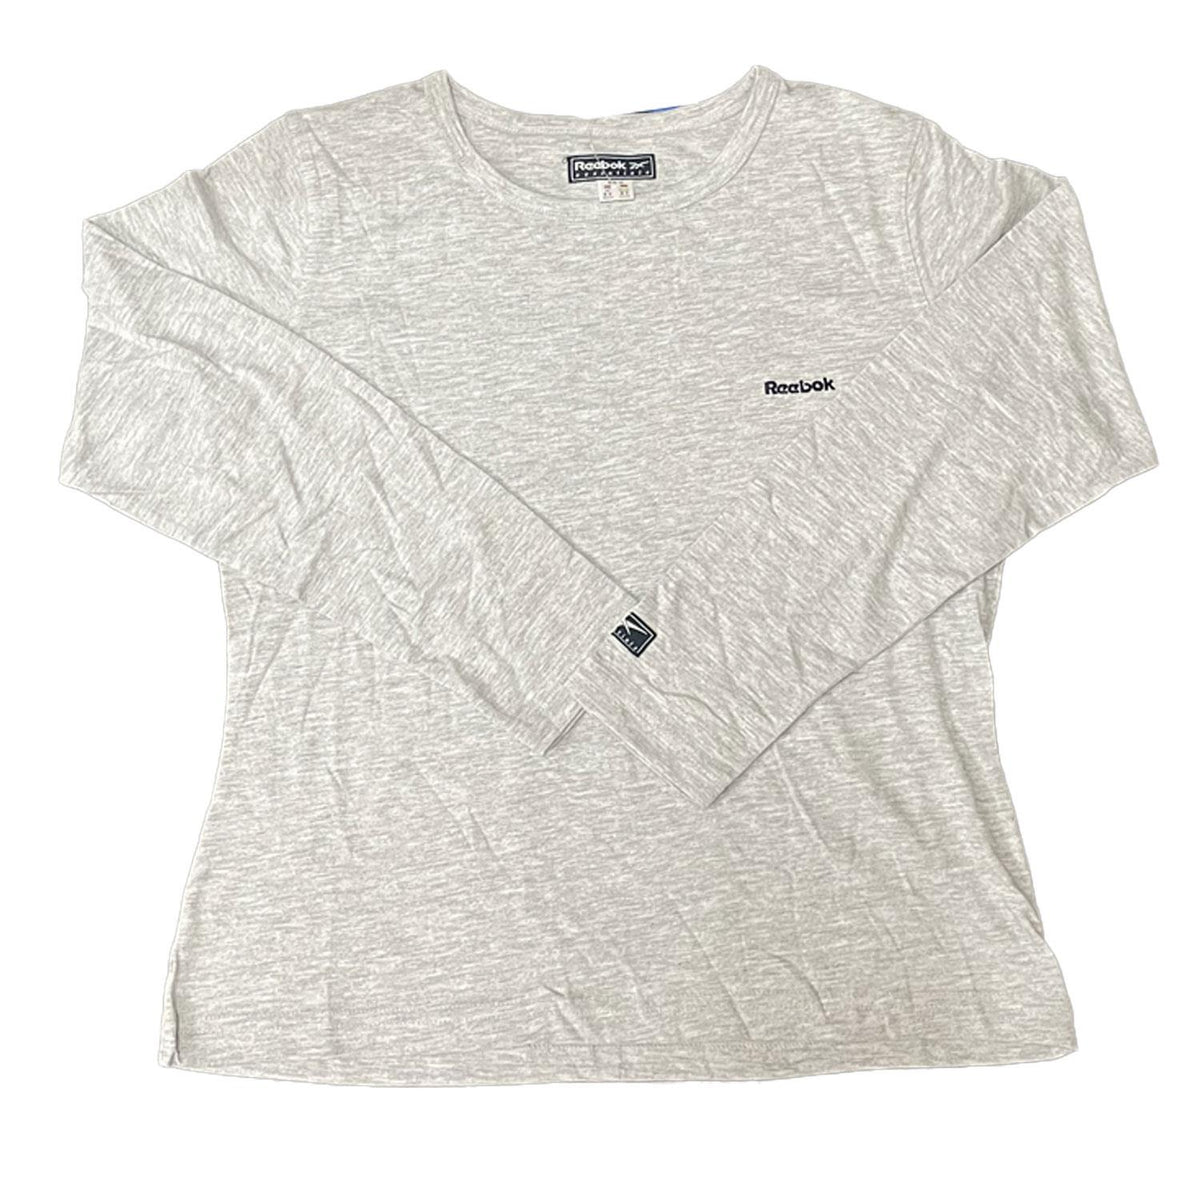 Reebok Womens Freestyle Long Sleeve T-Shirt - Grey - UK Size 12